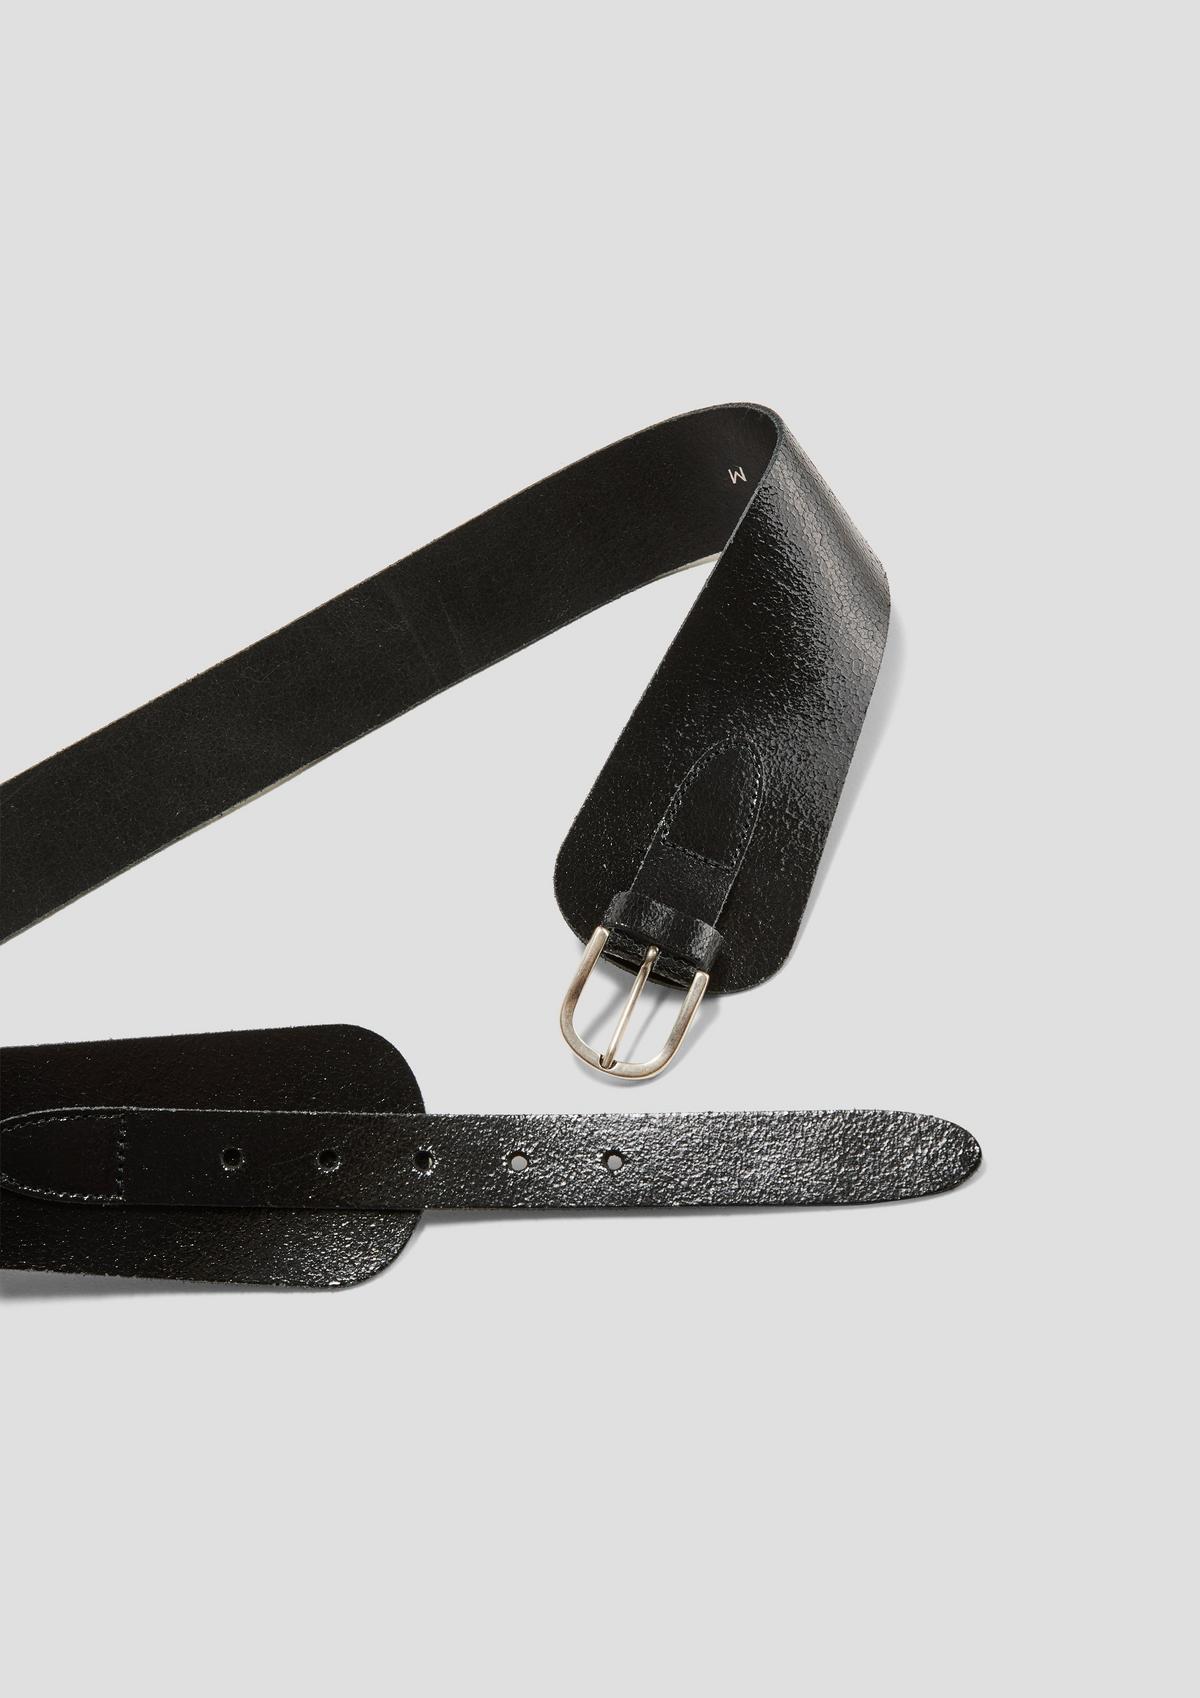 s.Oliver Patent leather belt